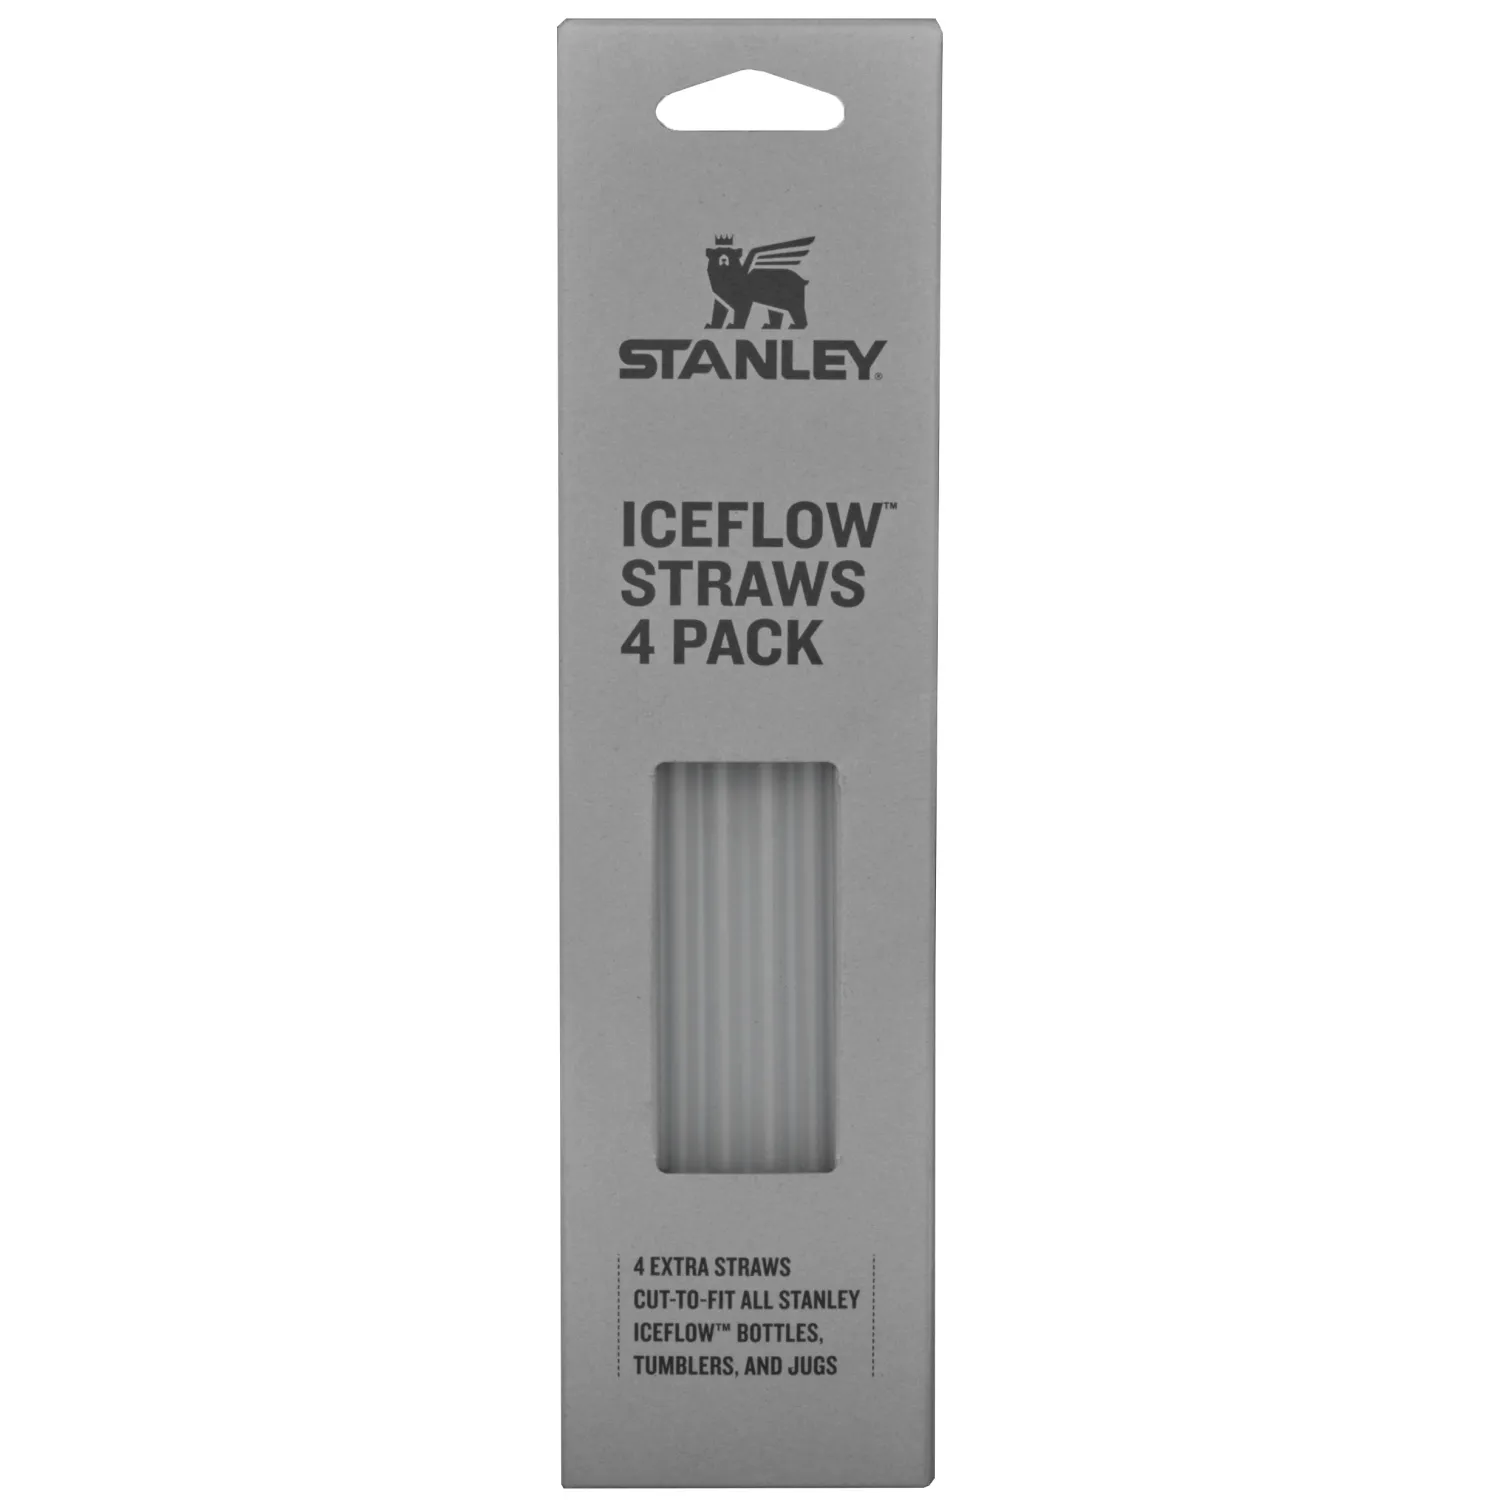 Iceflow Straws 4 Pack - Front Packaging.jpg